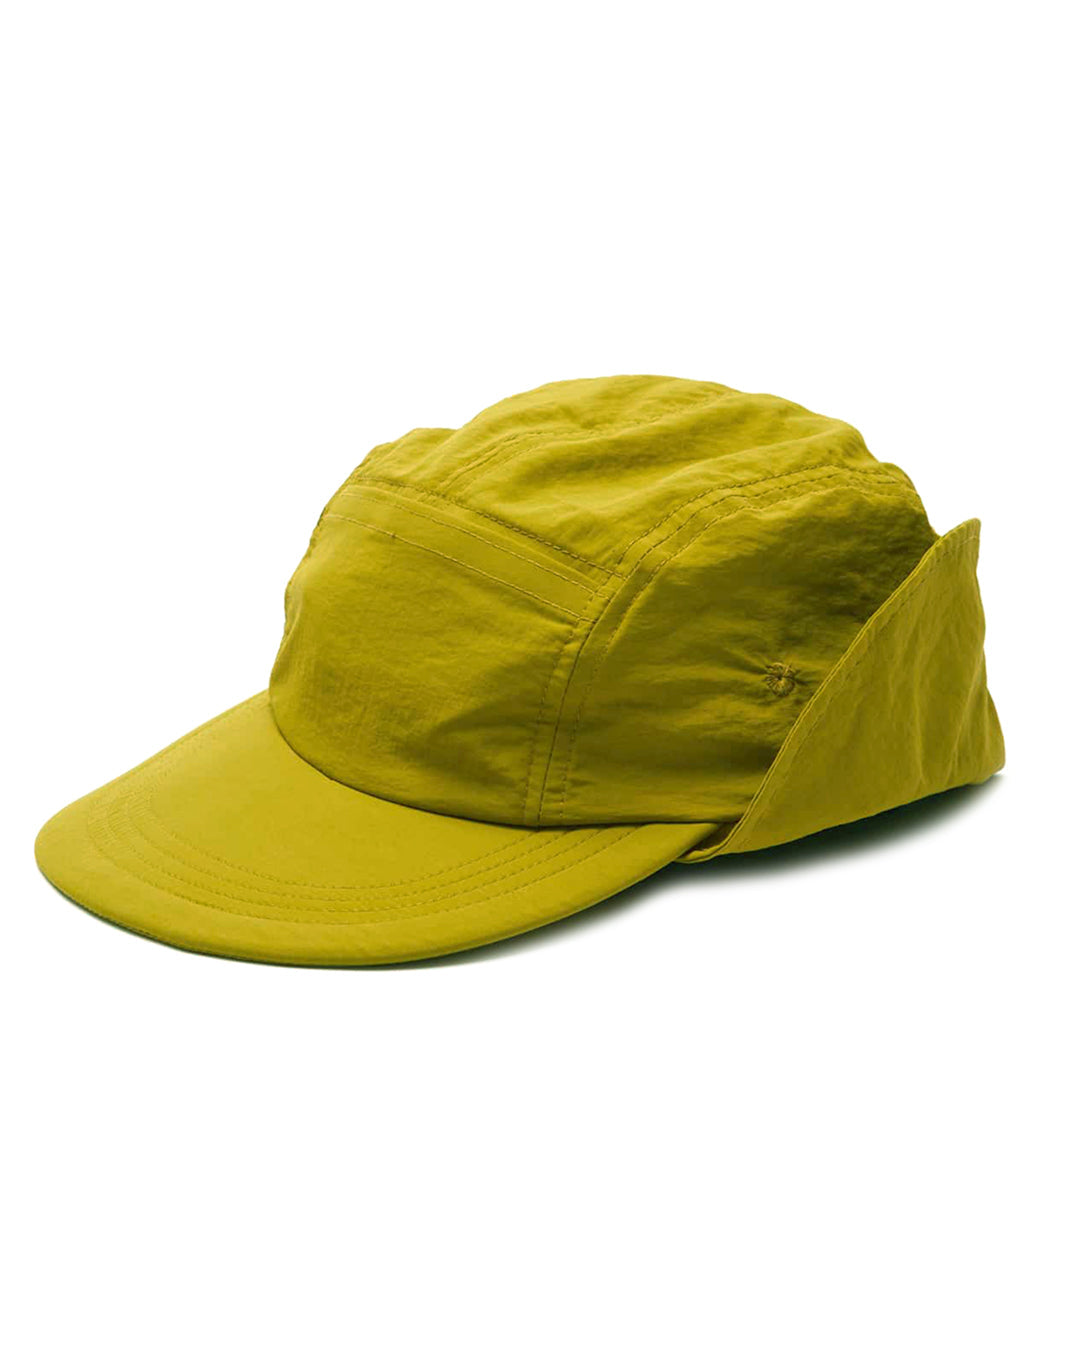 限定価格BAL / SUBLIME SUNBLOCK CAMP CAP 帽子